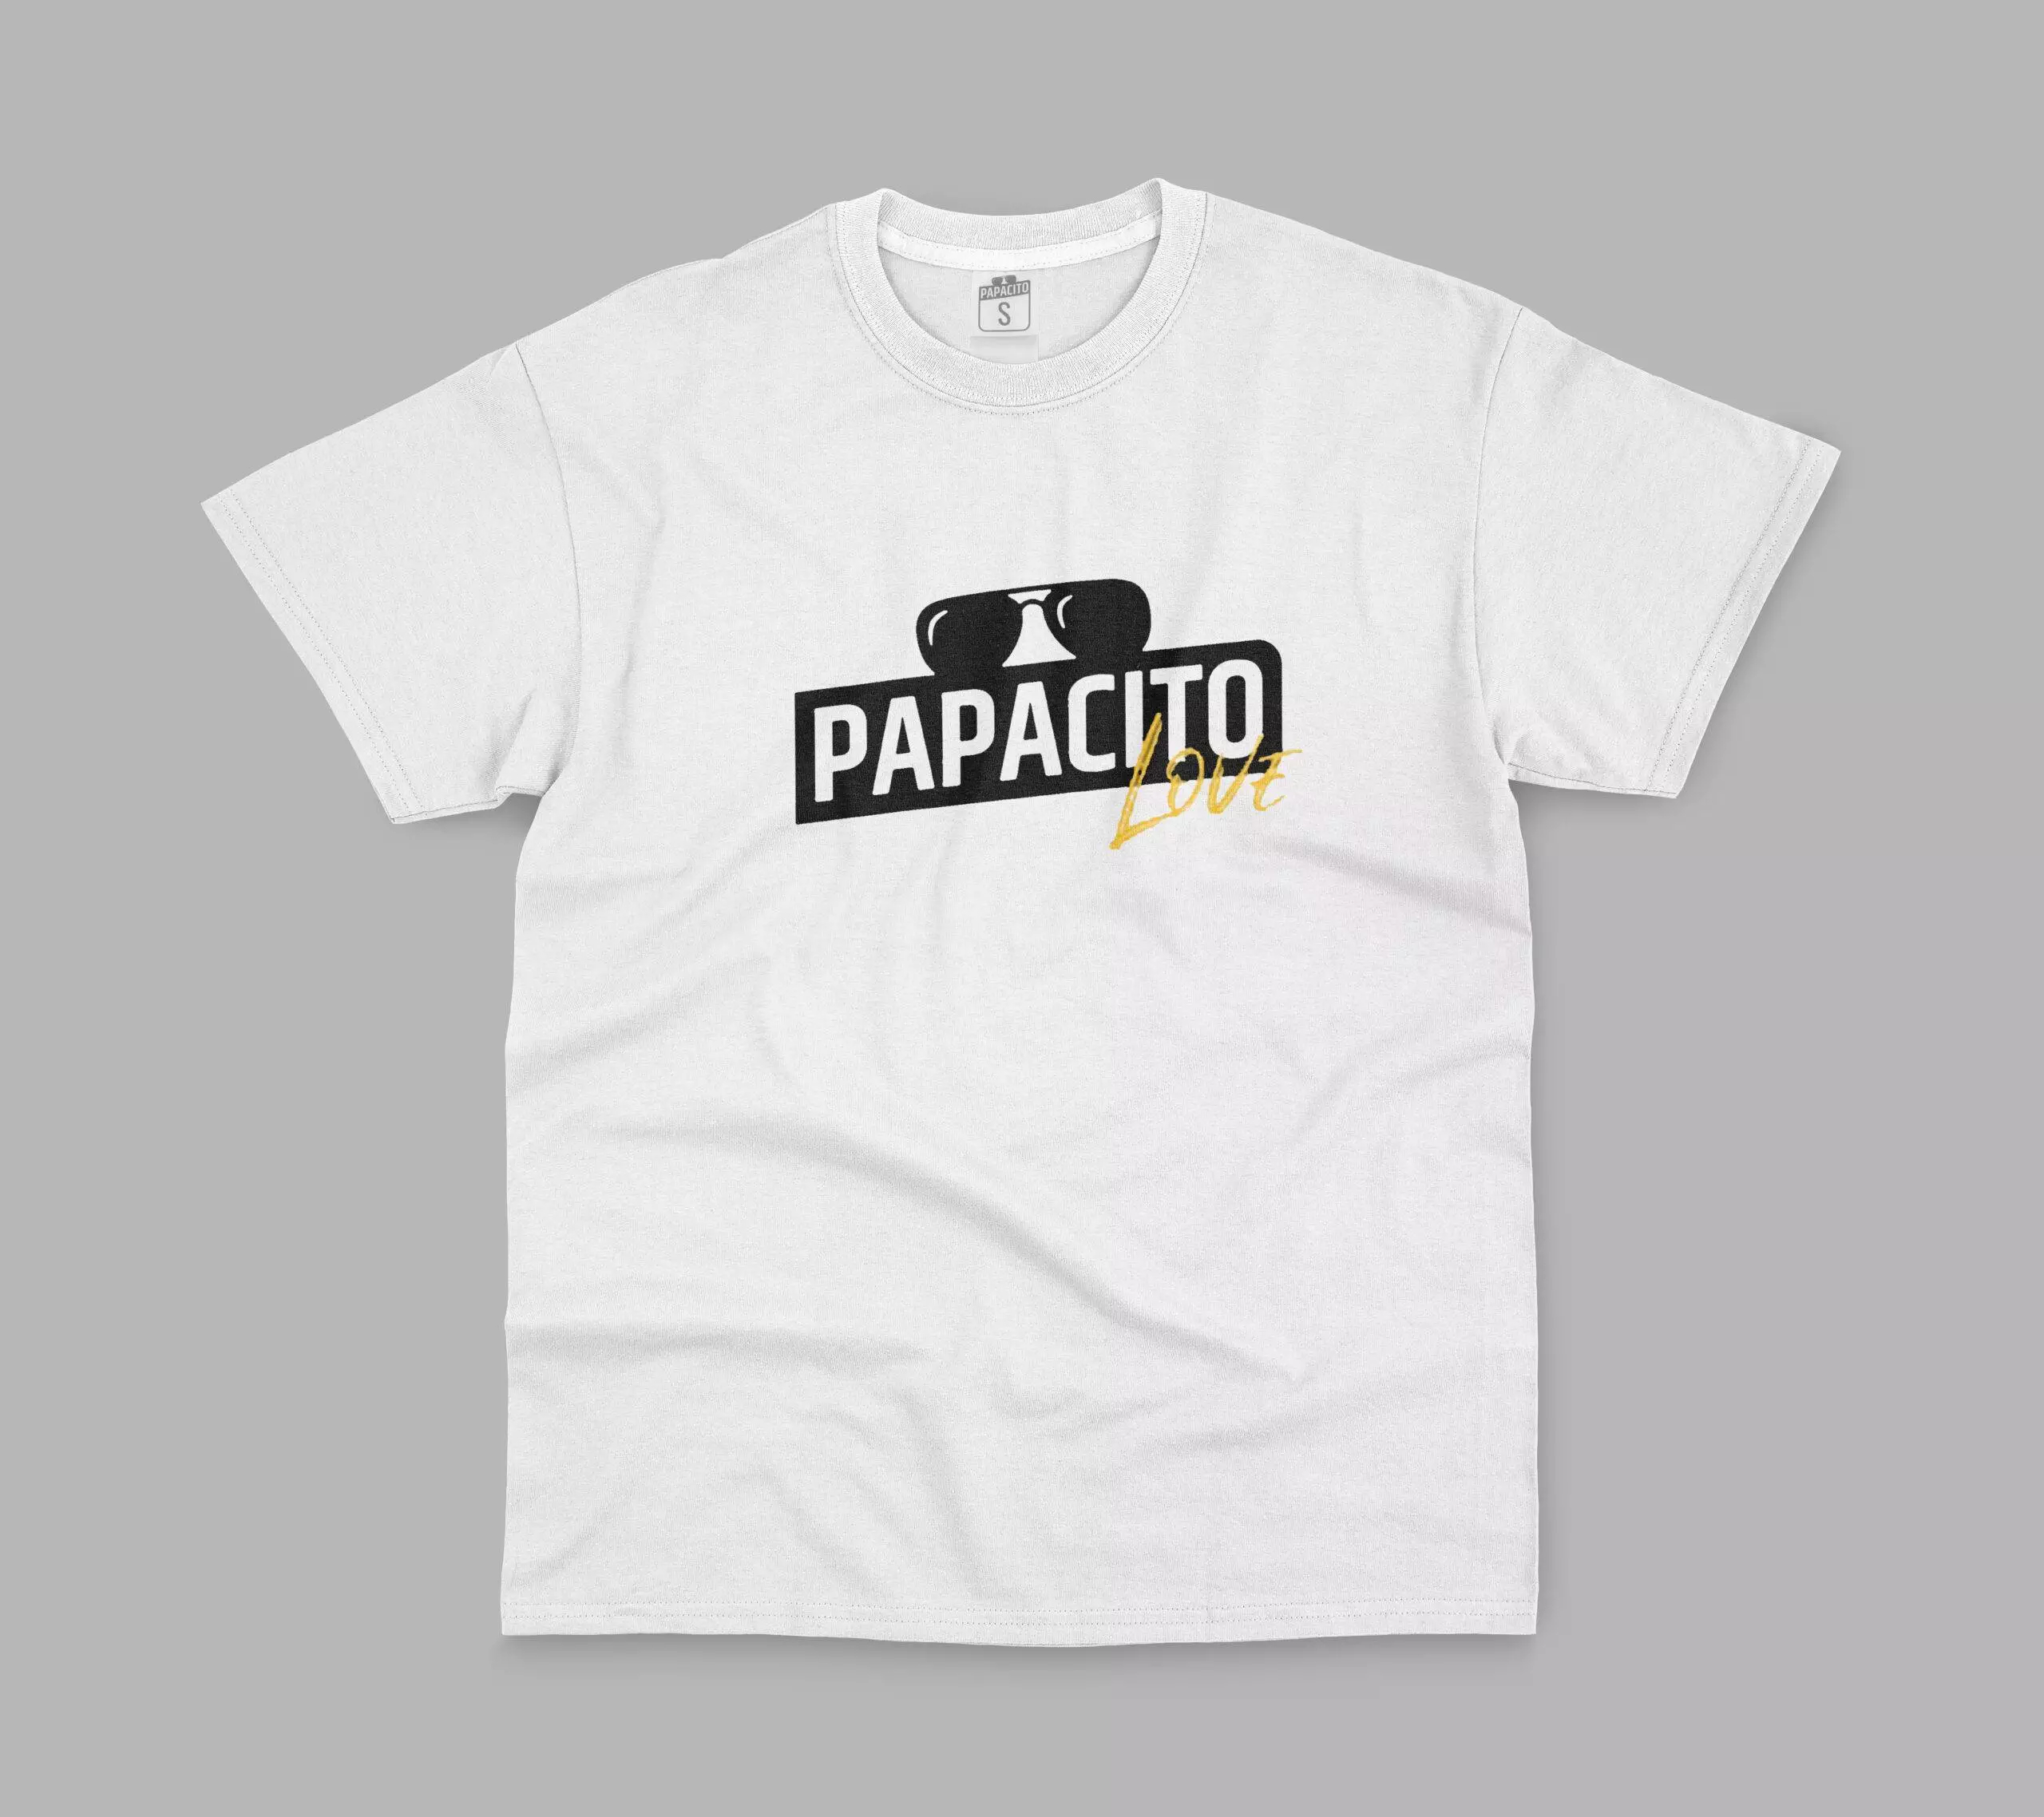 Papacito love - papacito white shirt scaled 1